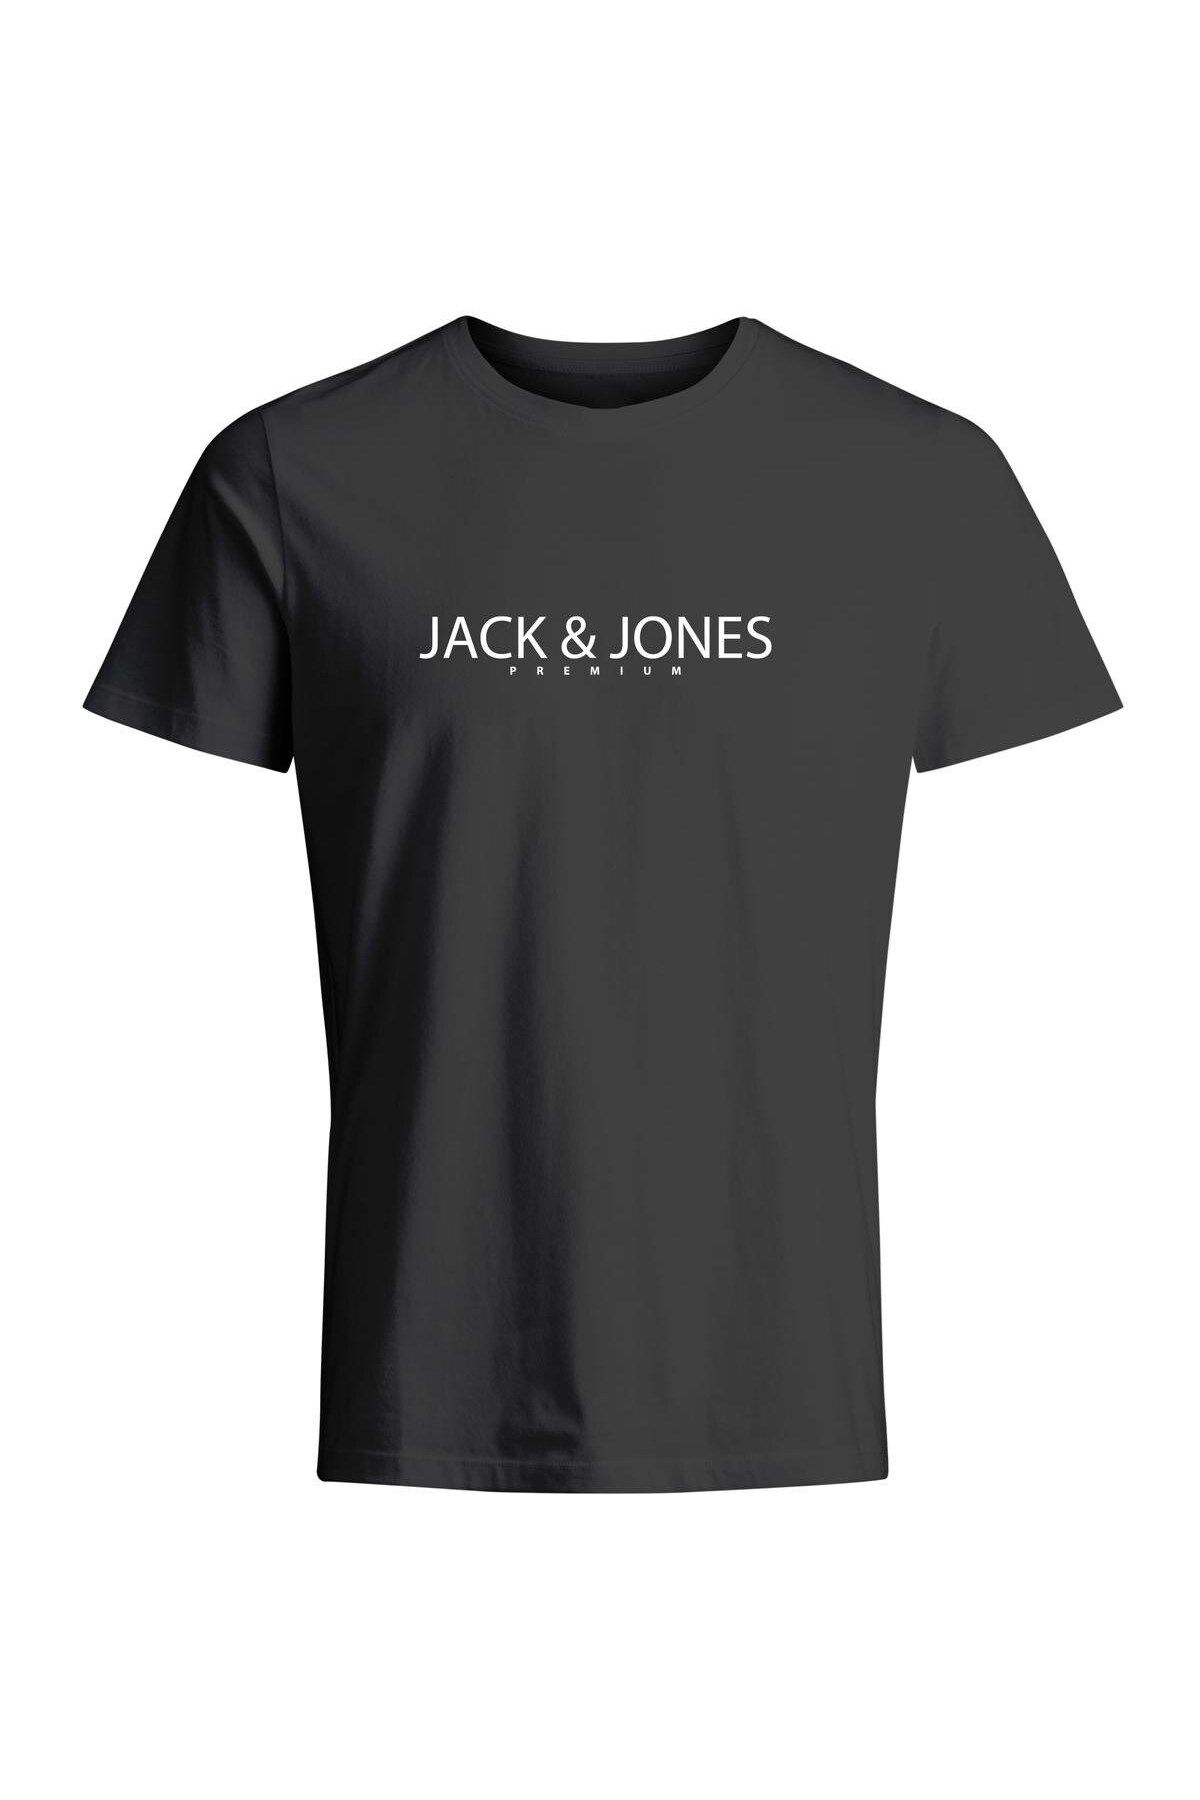 Jack & Jones Jprblajack Ss Tee Crew Neck Fst Ln Erkek T-shirt 12256971 Black Onyx